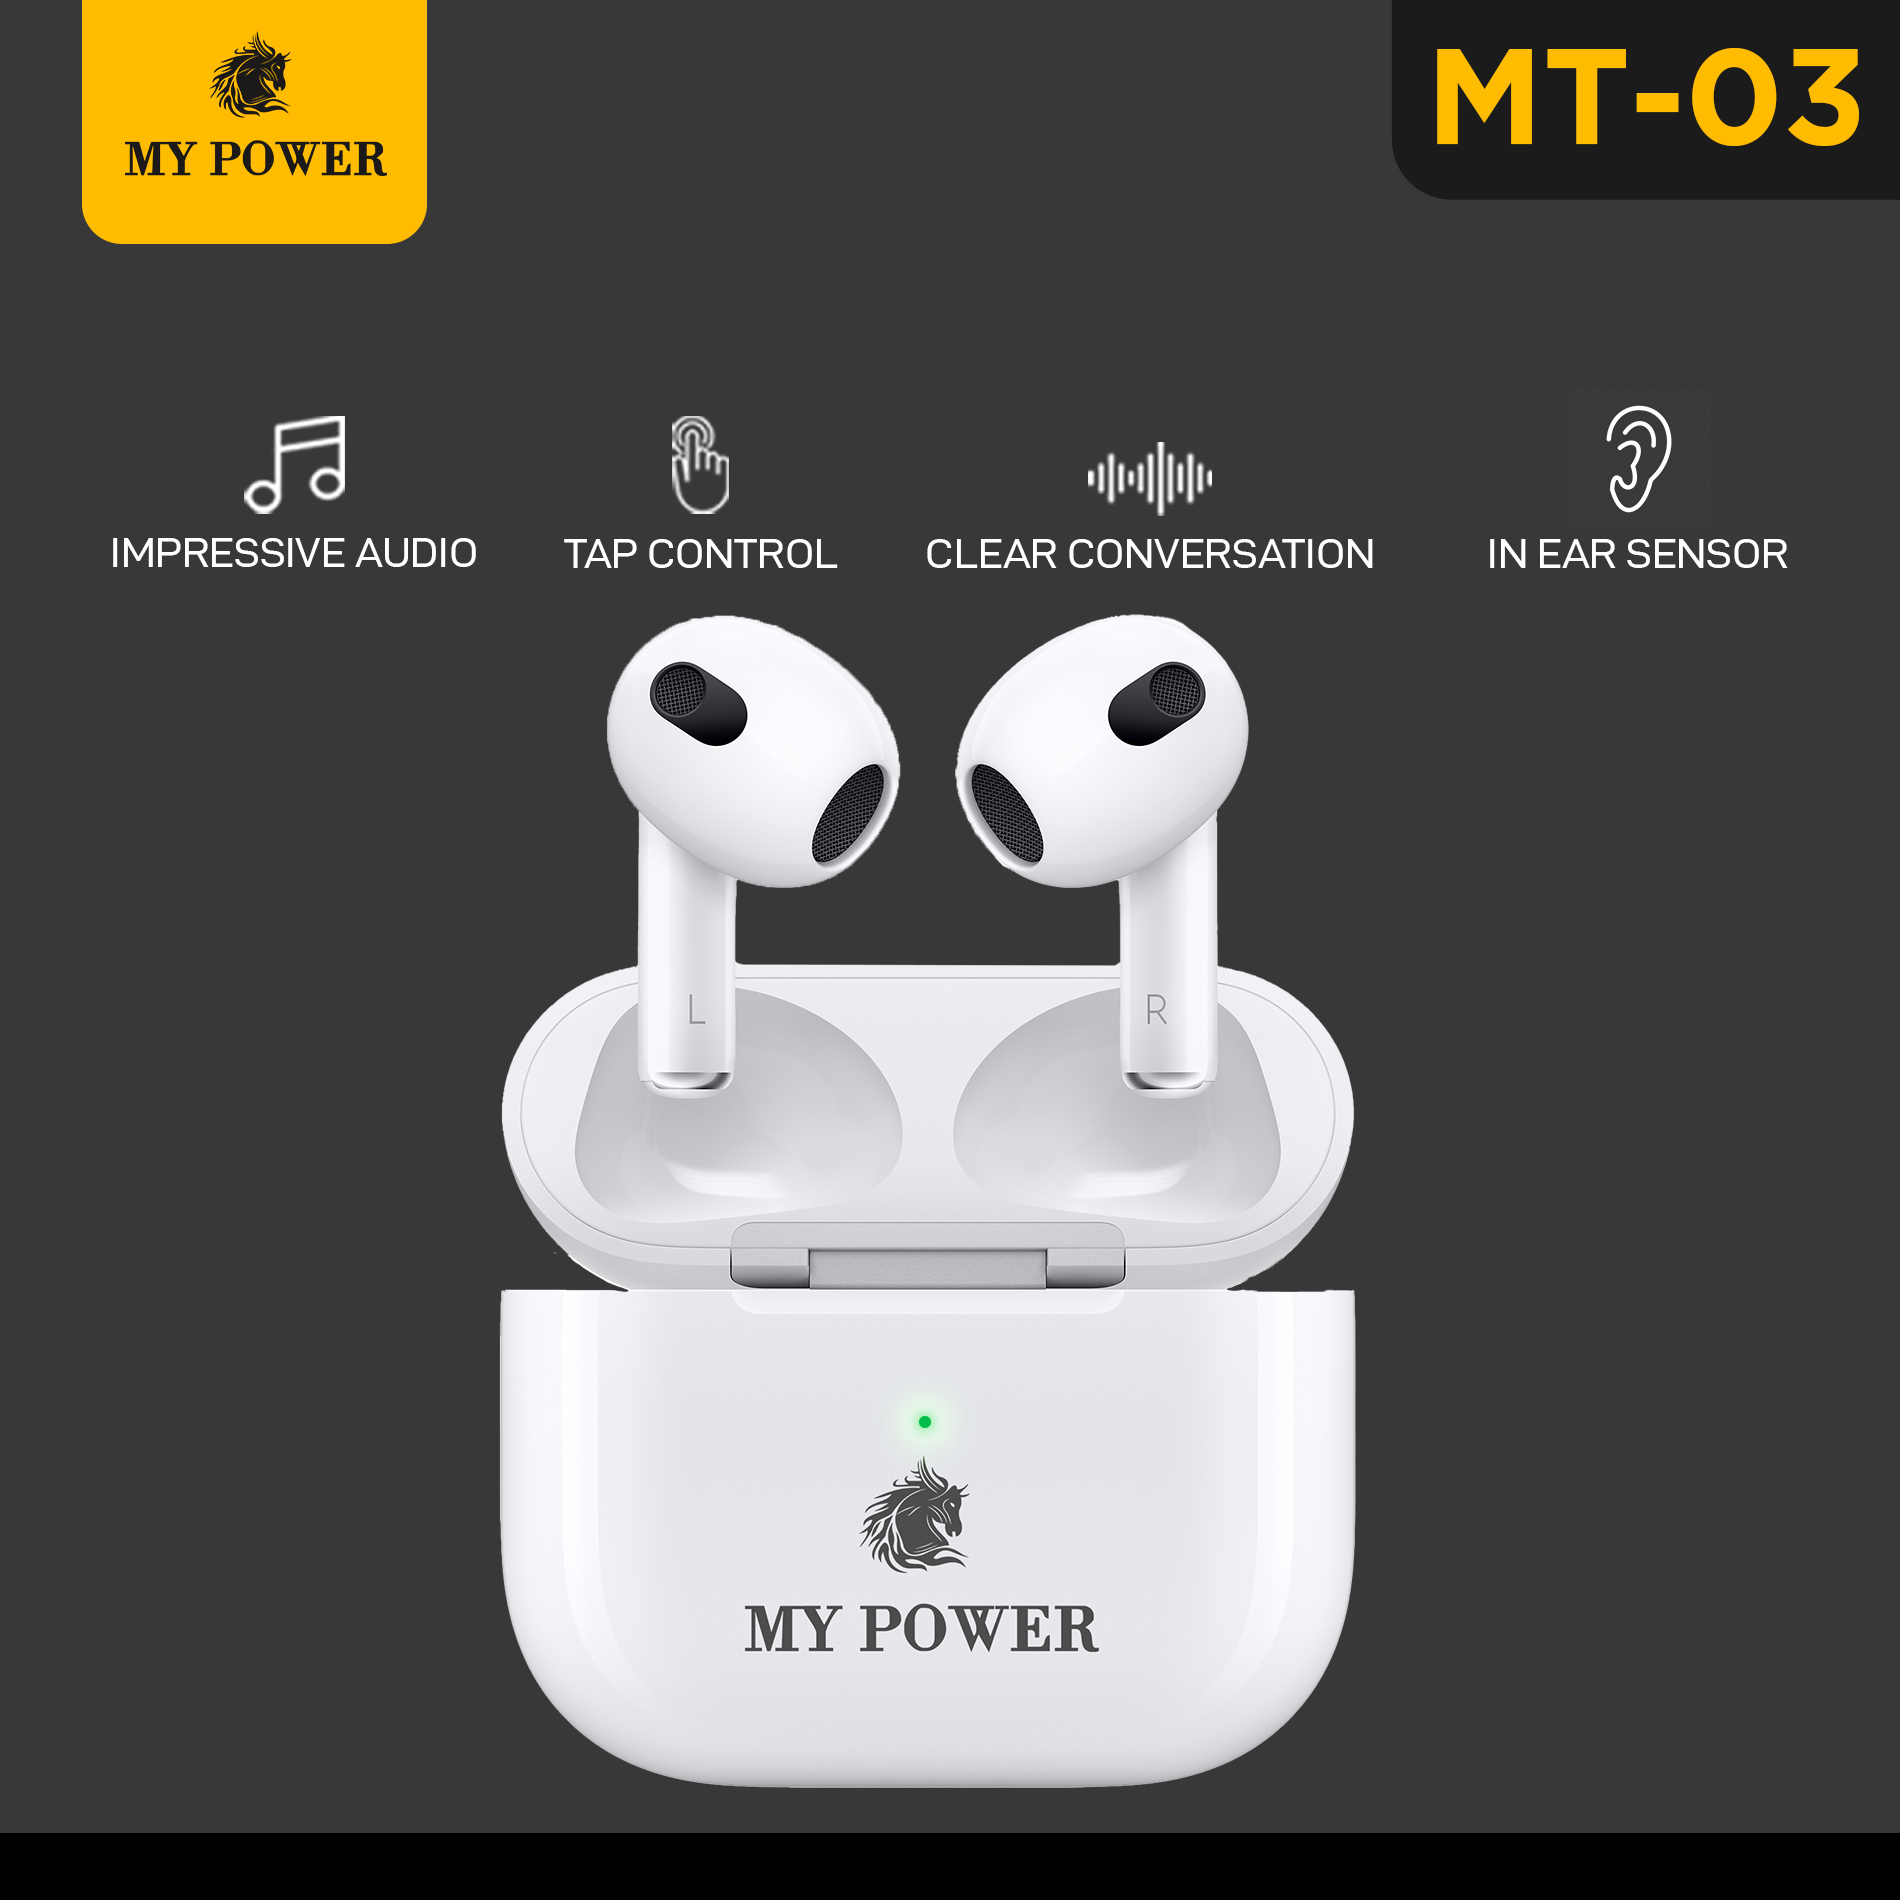 My Power MT-03 TWS Bluetooth Earbuds